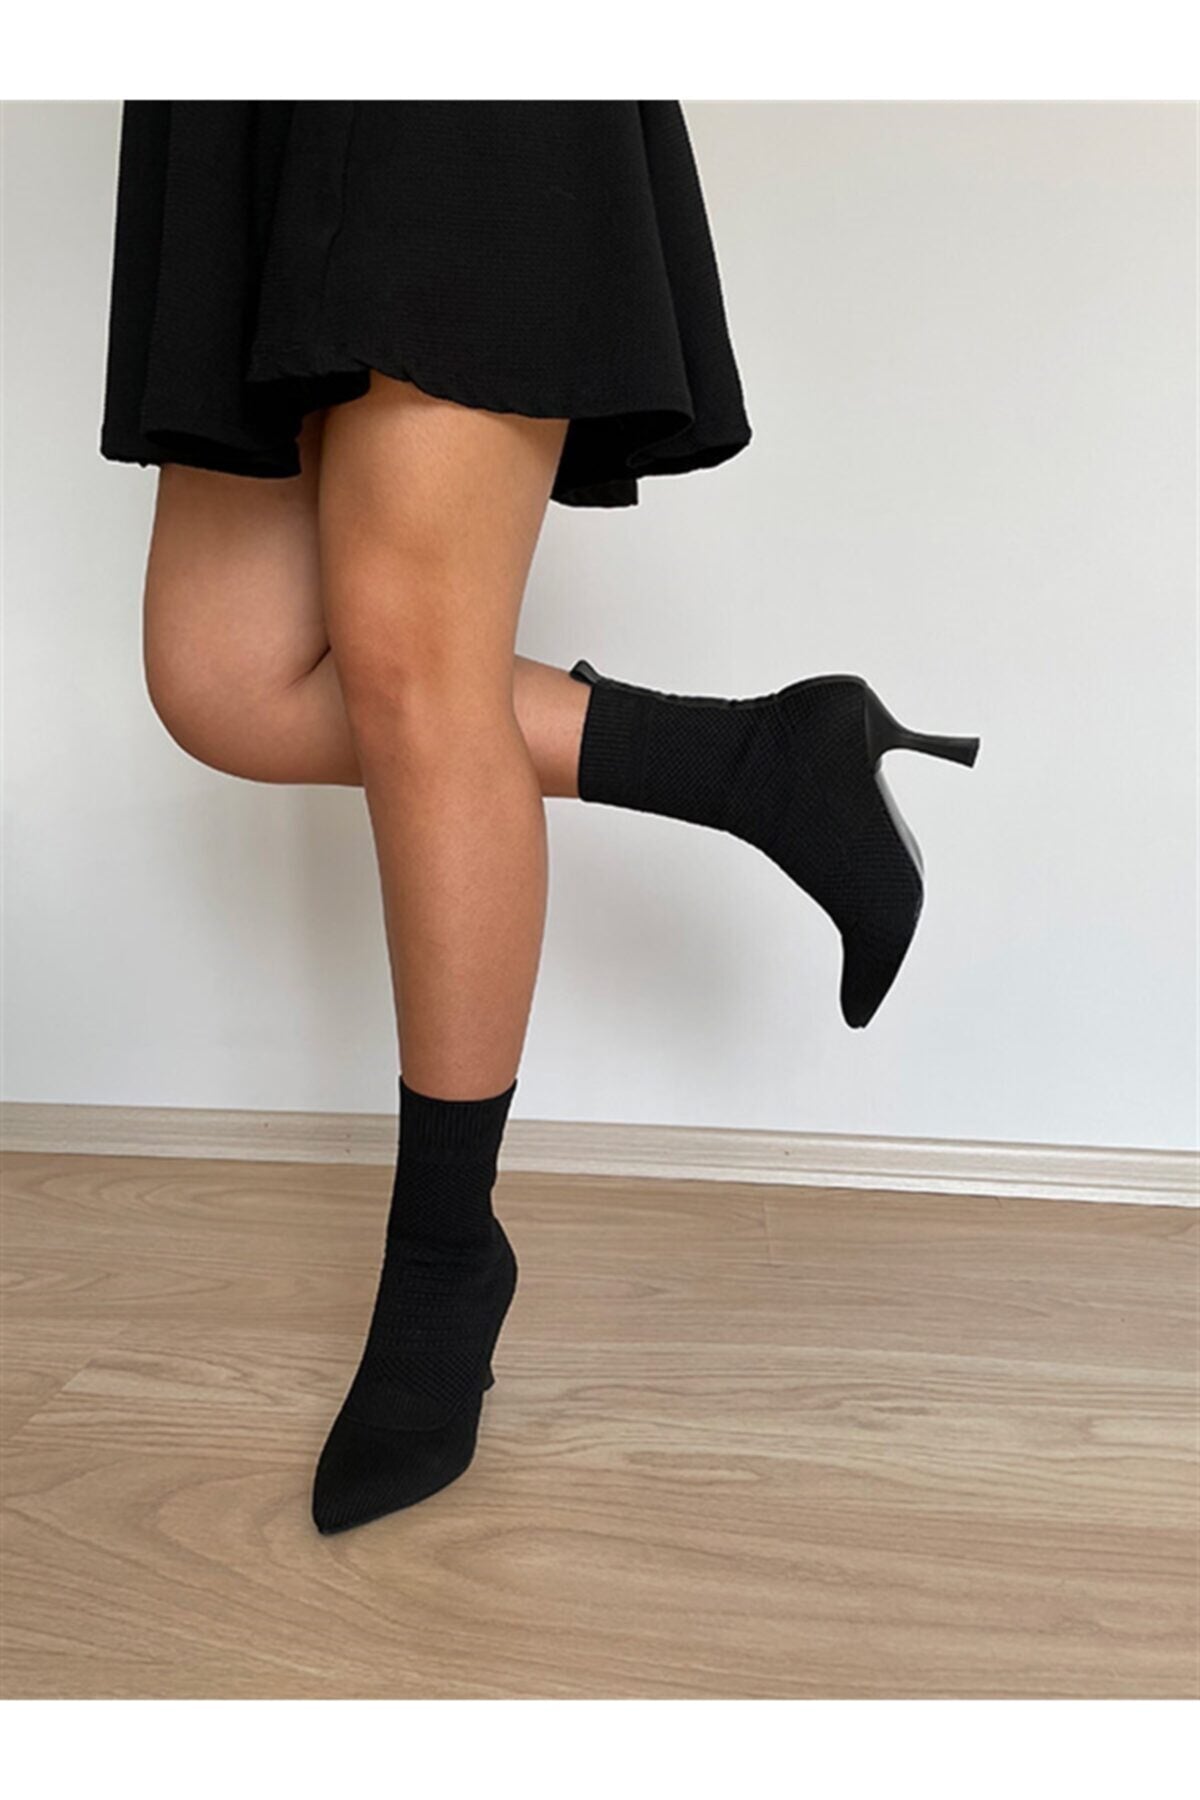 Line black line detailed knitwear woman heeled boots